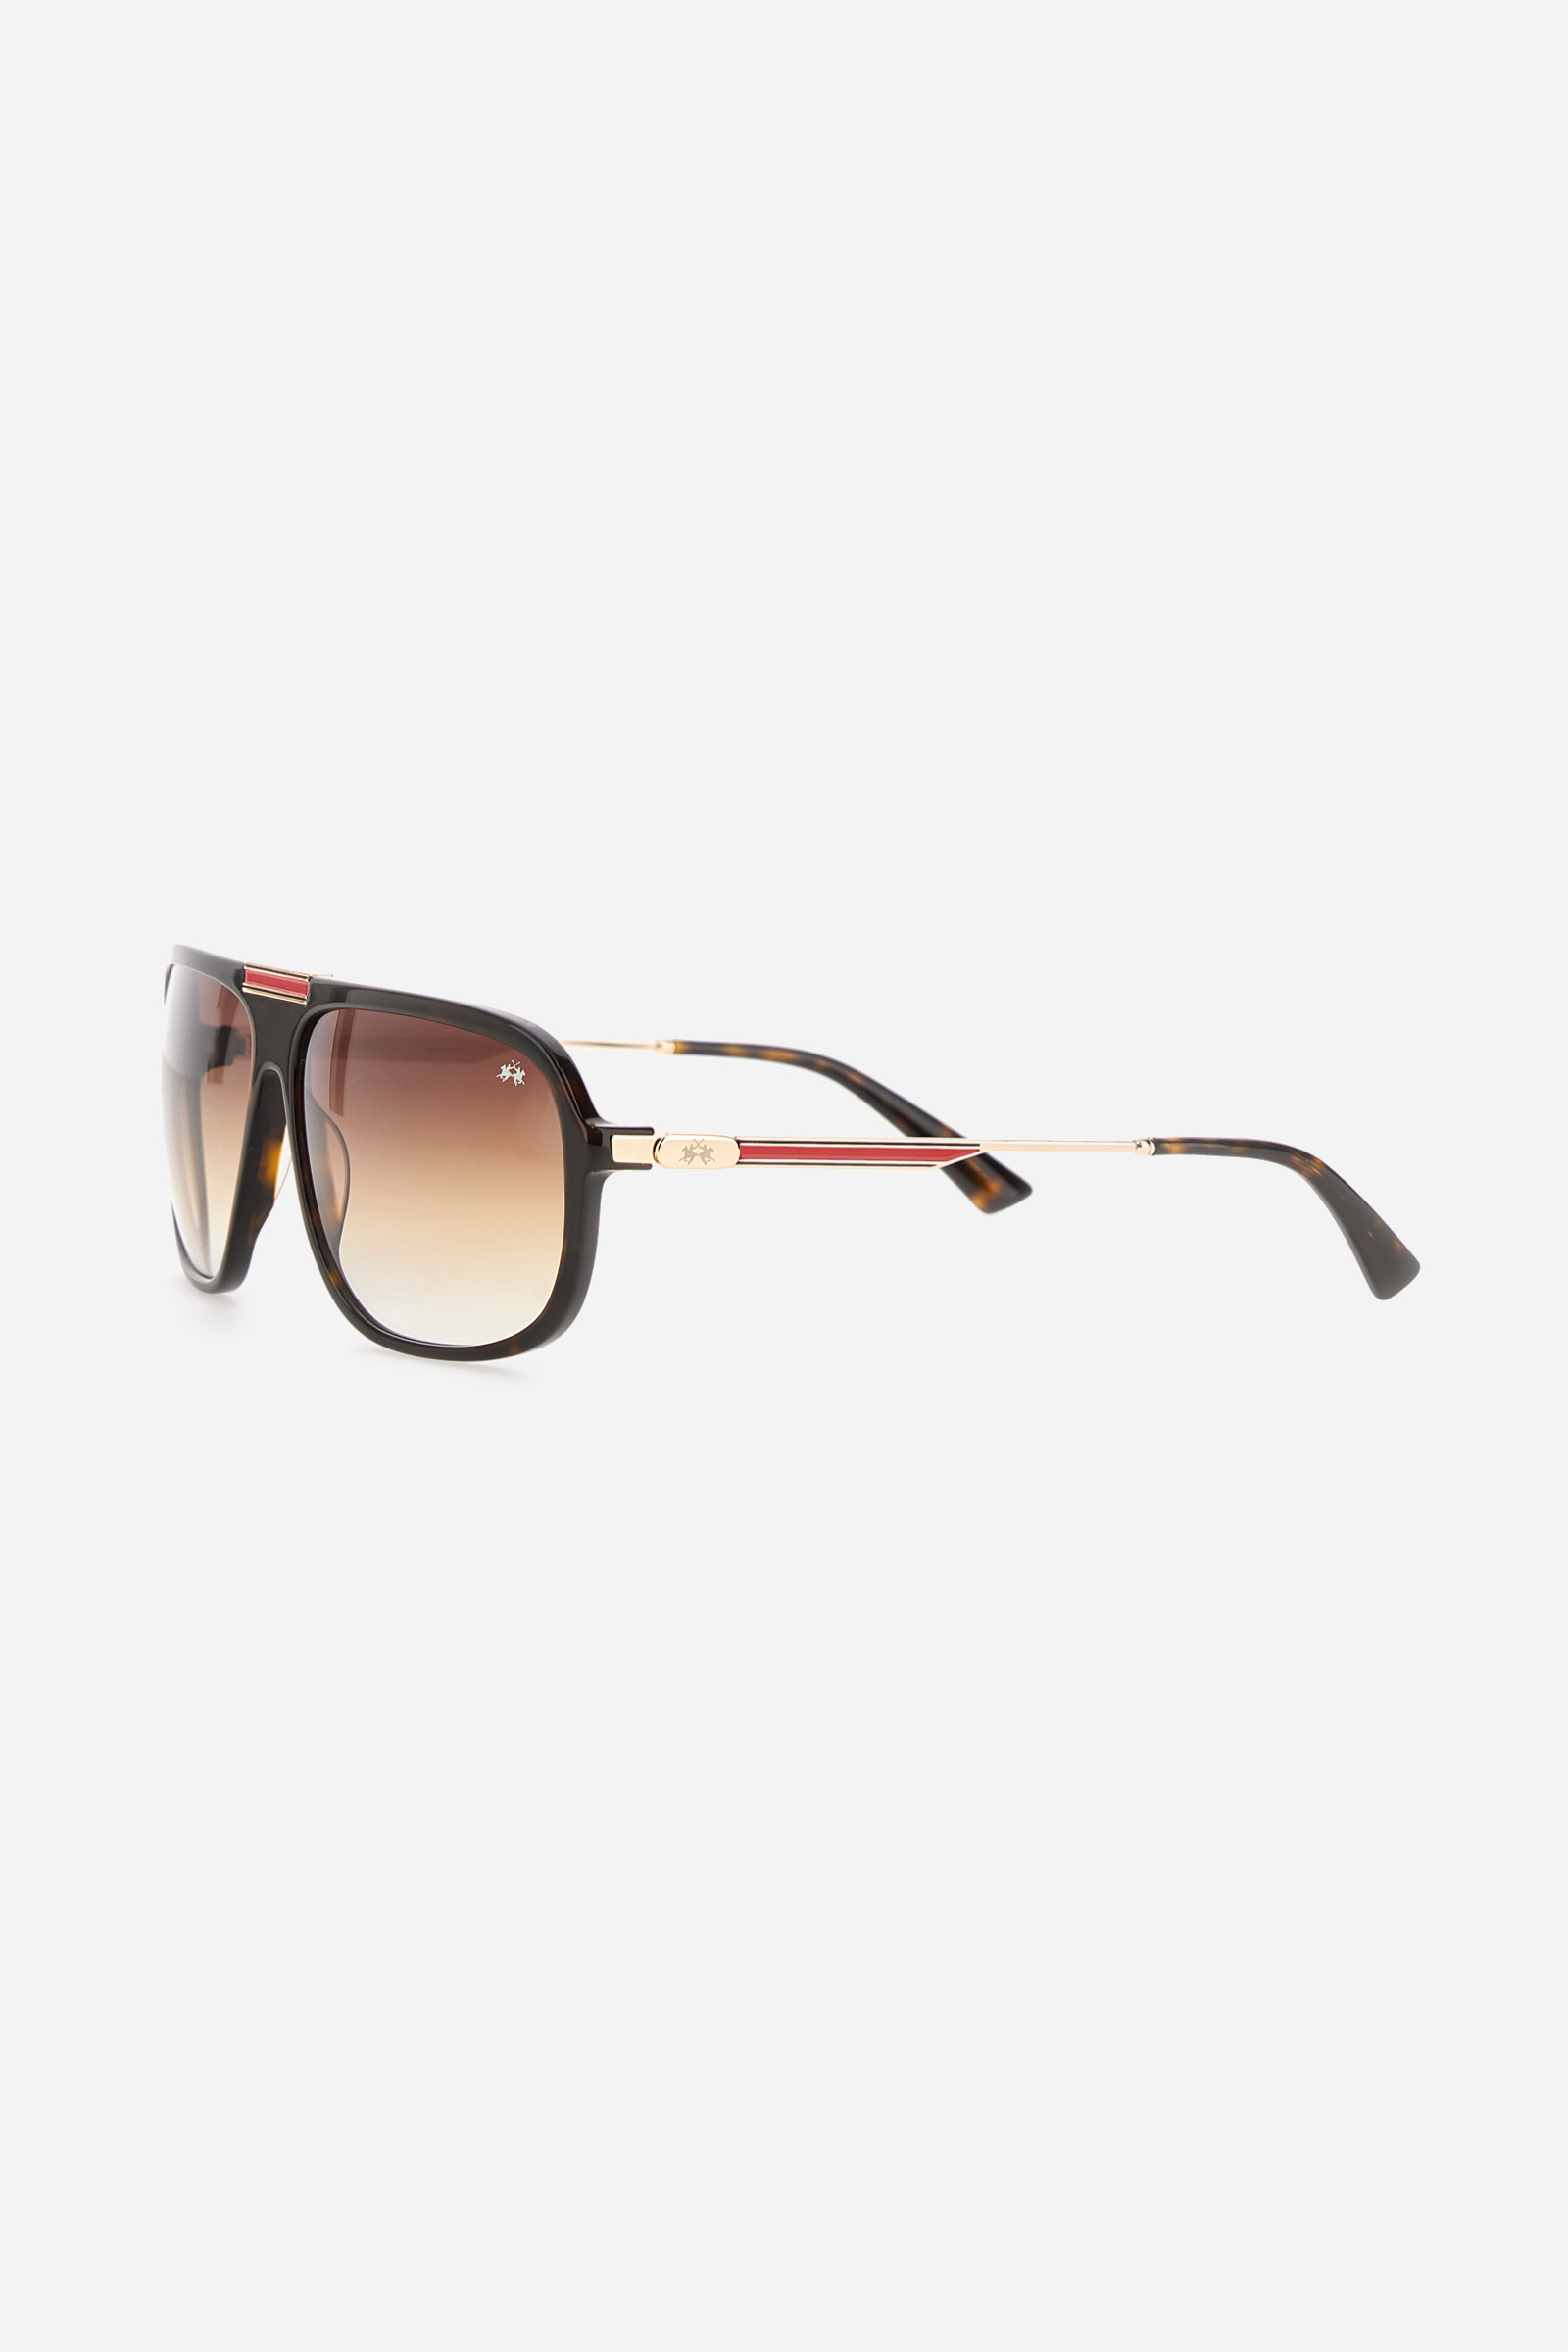 Sunglasses aviator style Dark Avana La Martina | Shop Online